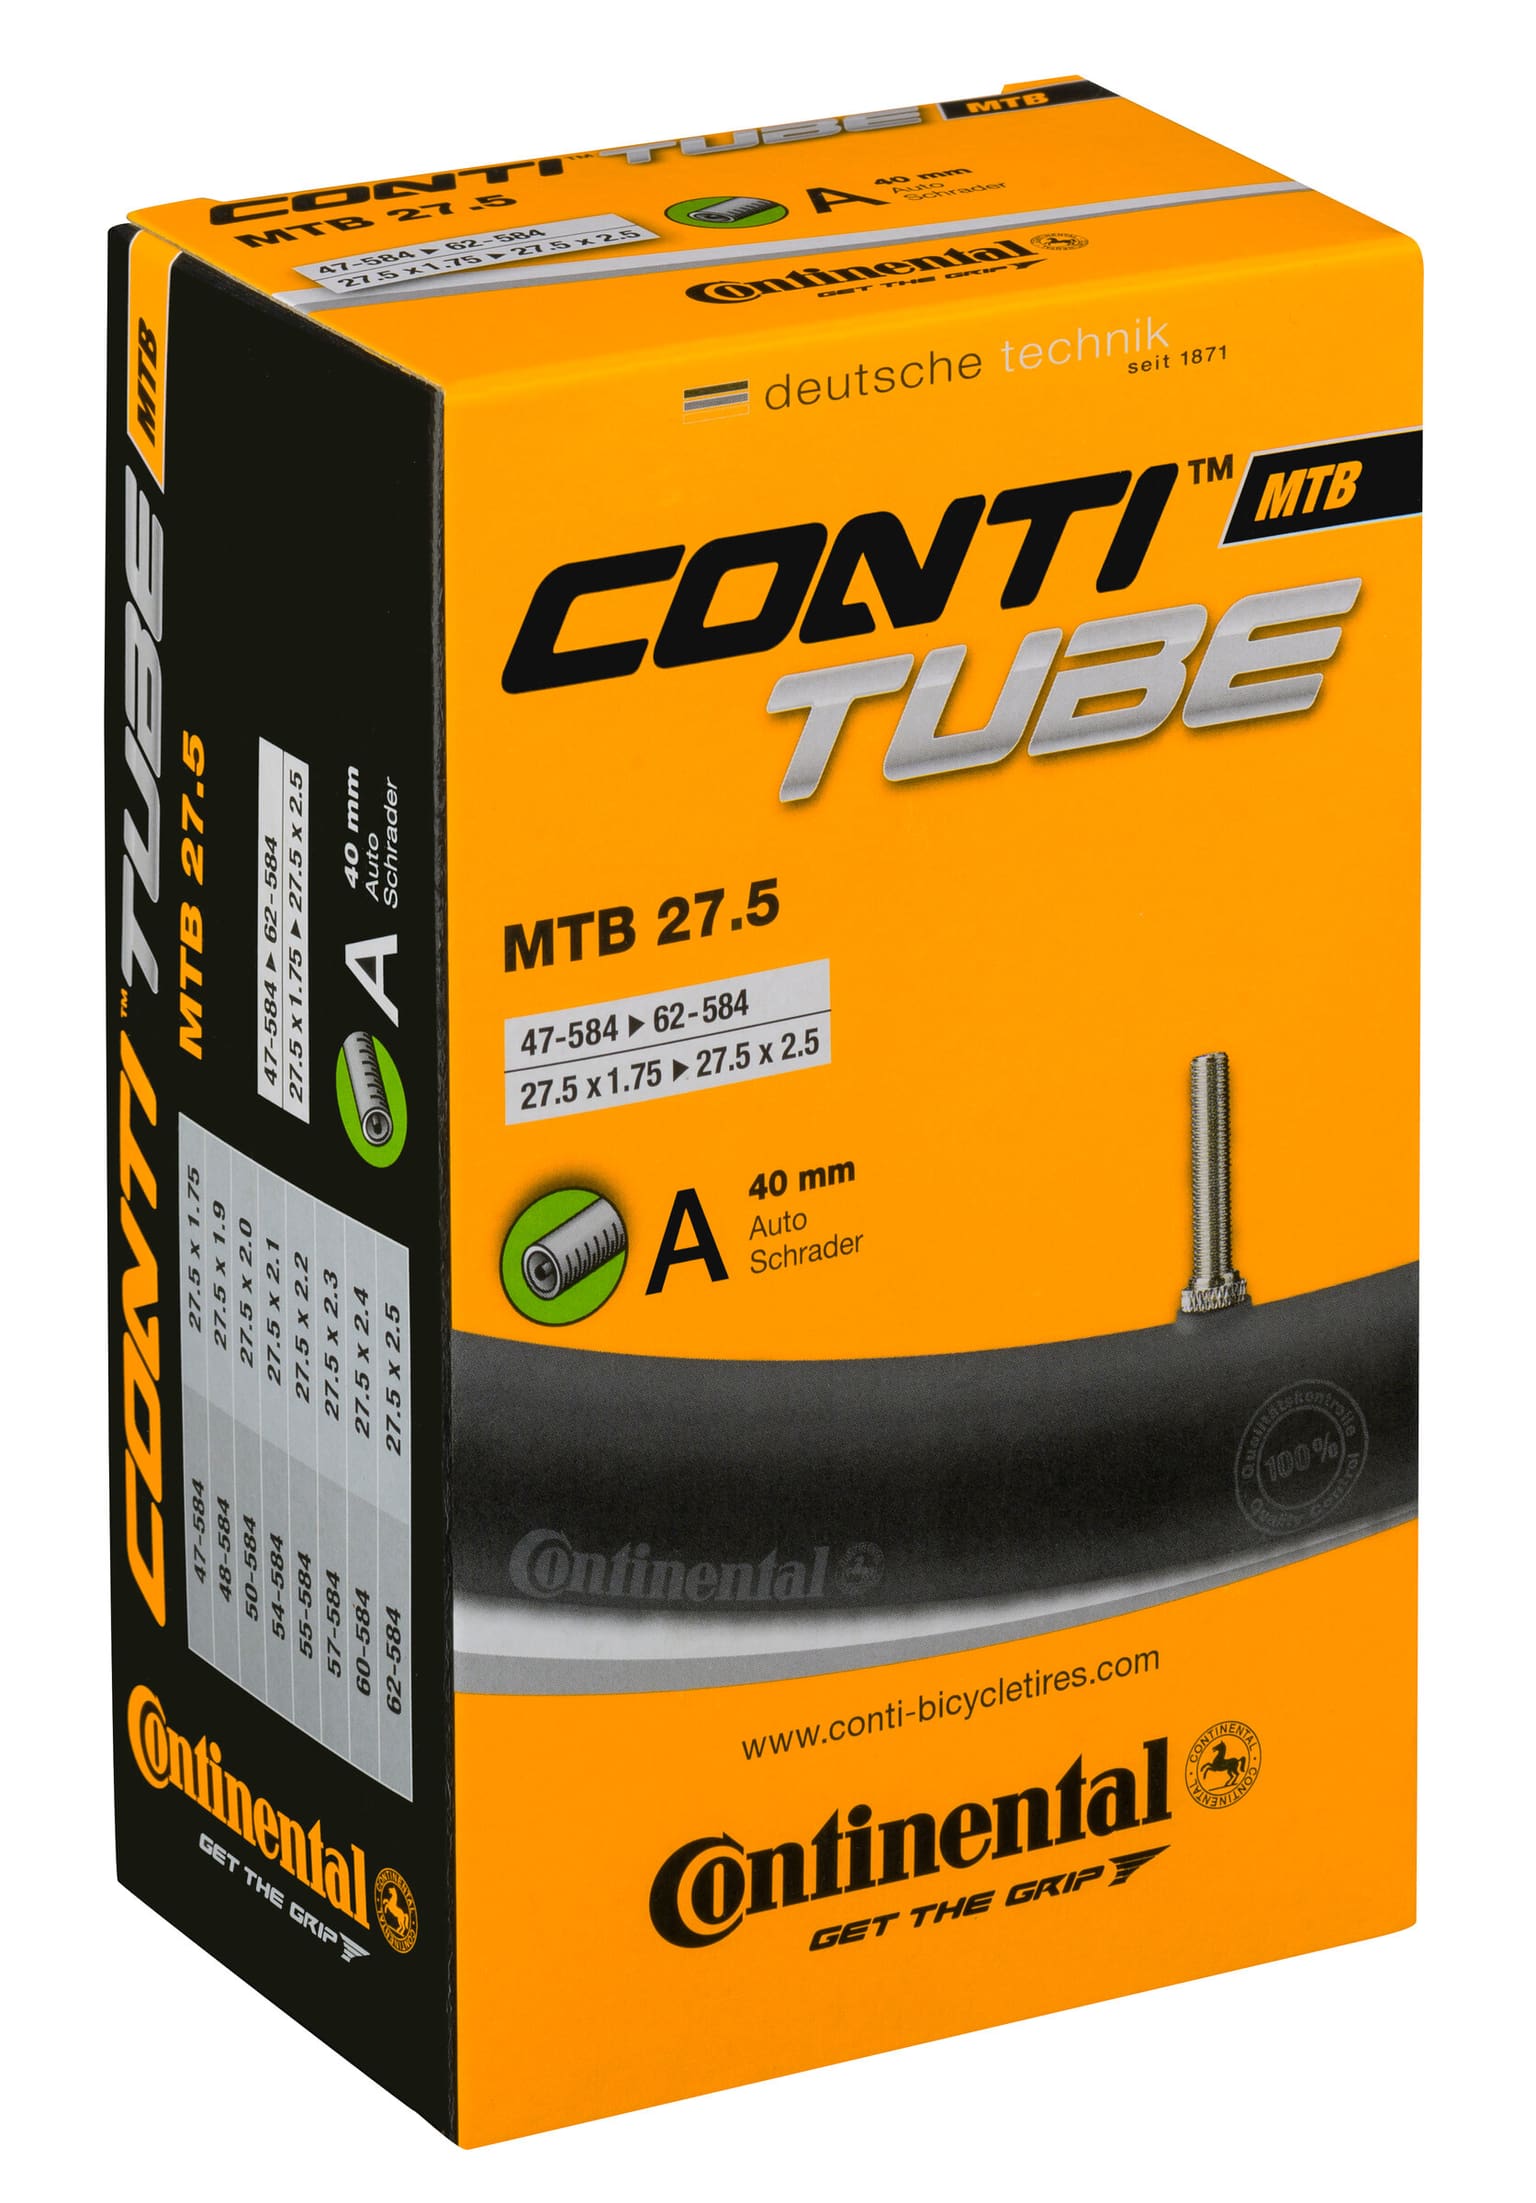 Continental Continental Conti MTB 27.5 A40 Camera d'aria per bicicletta 1